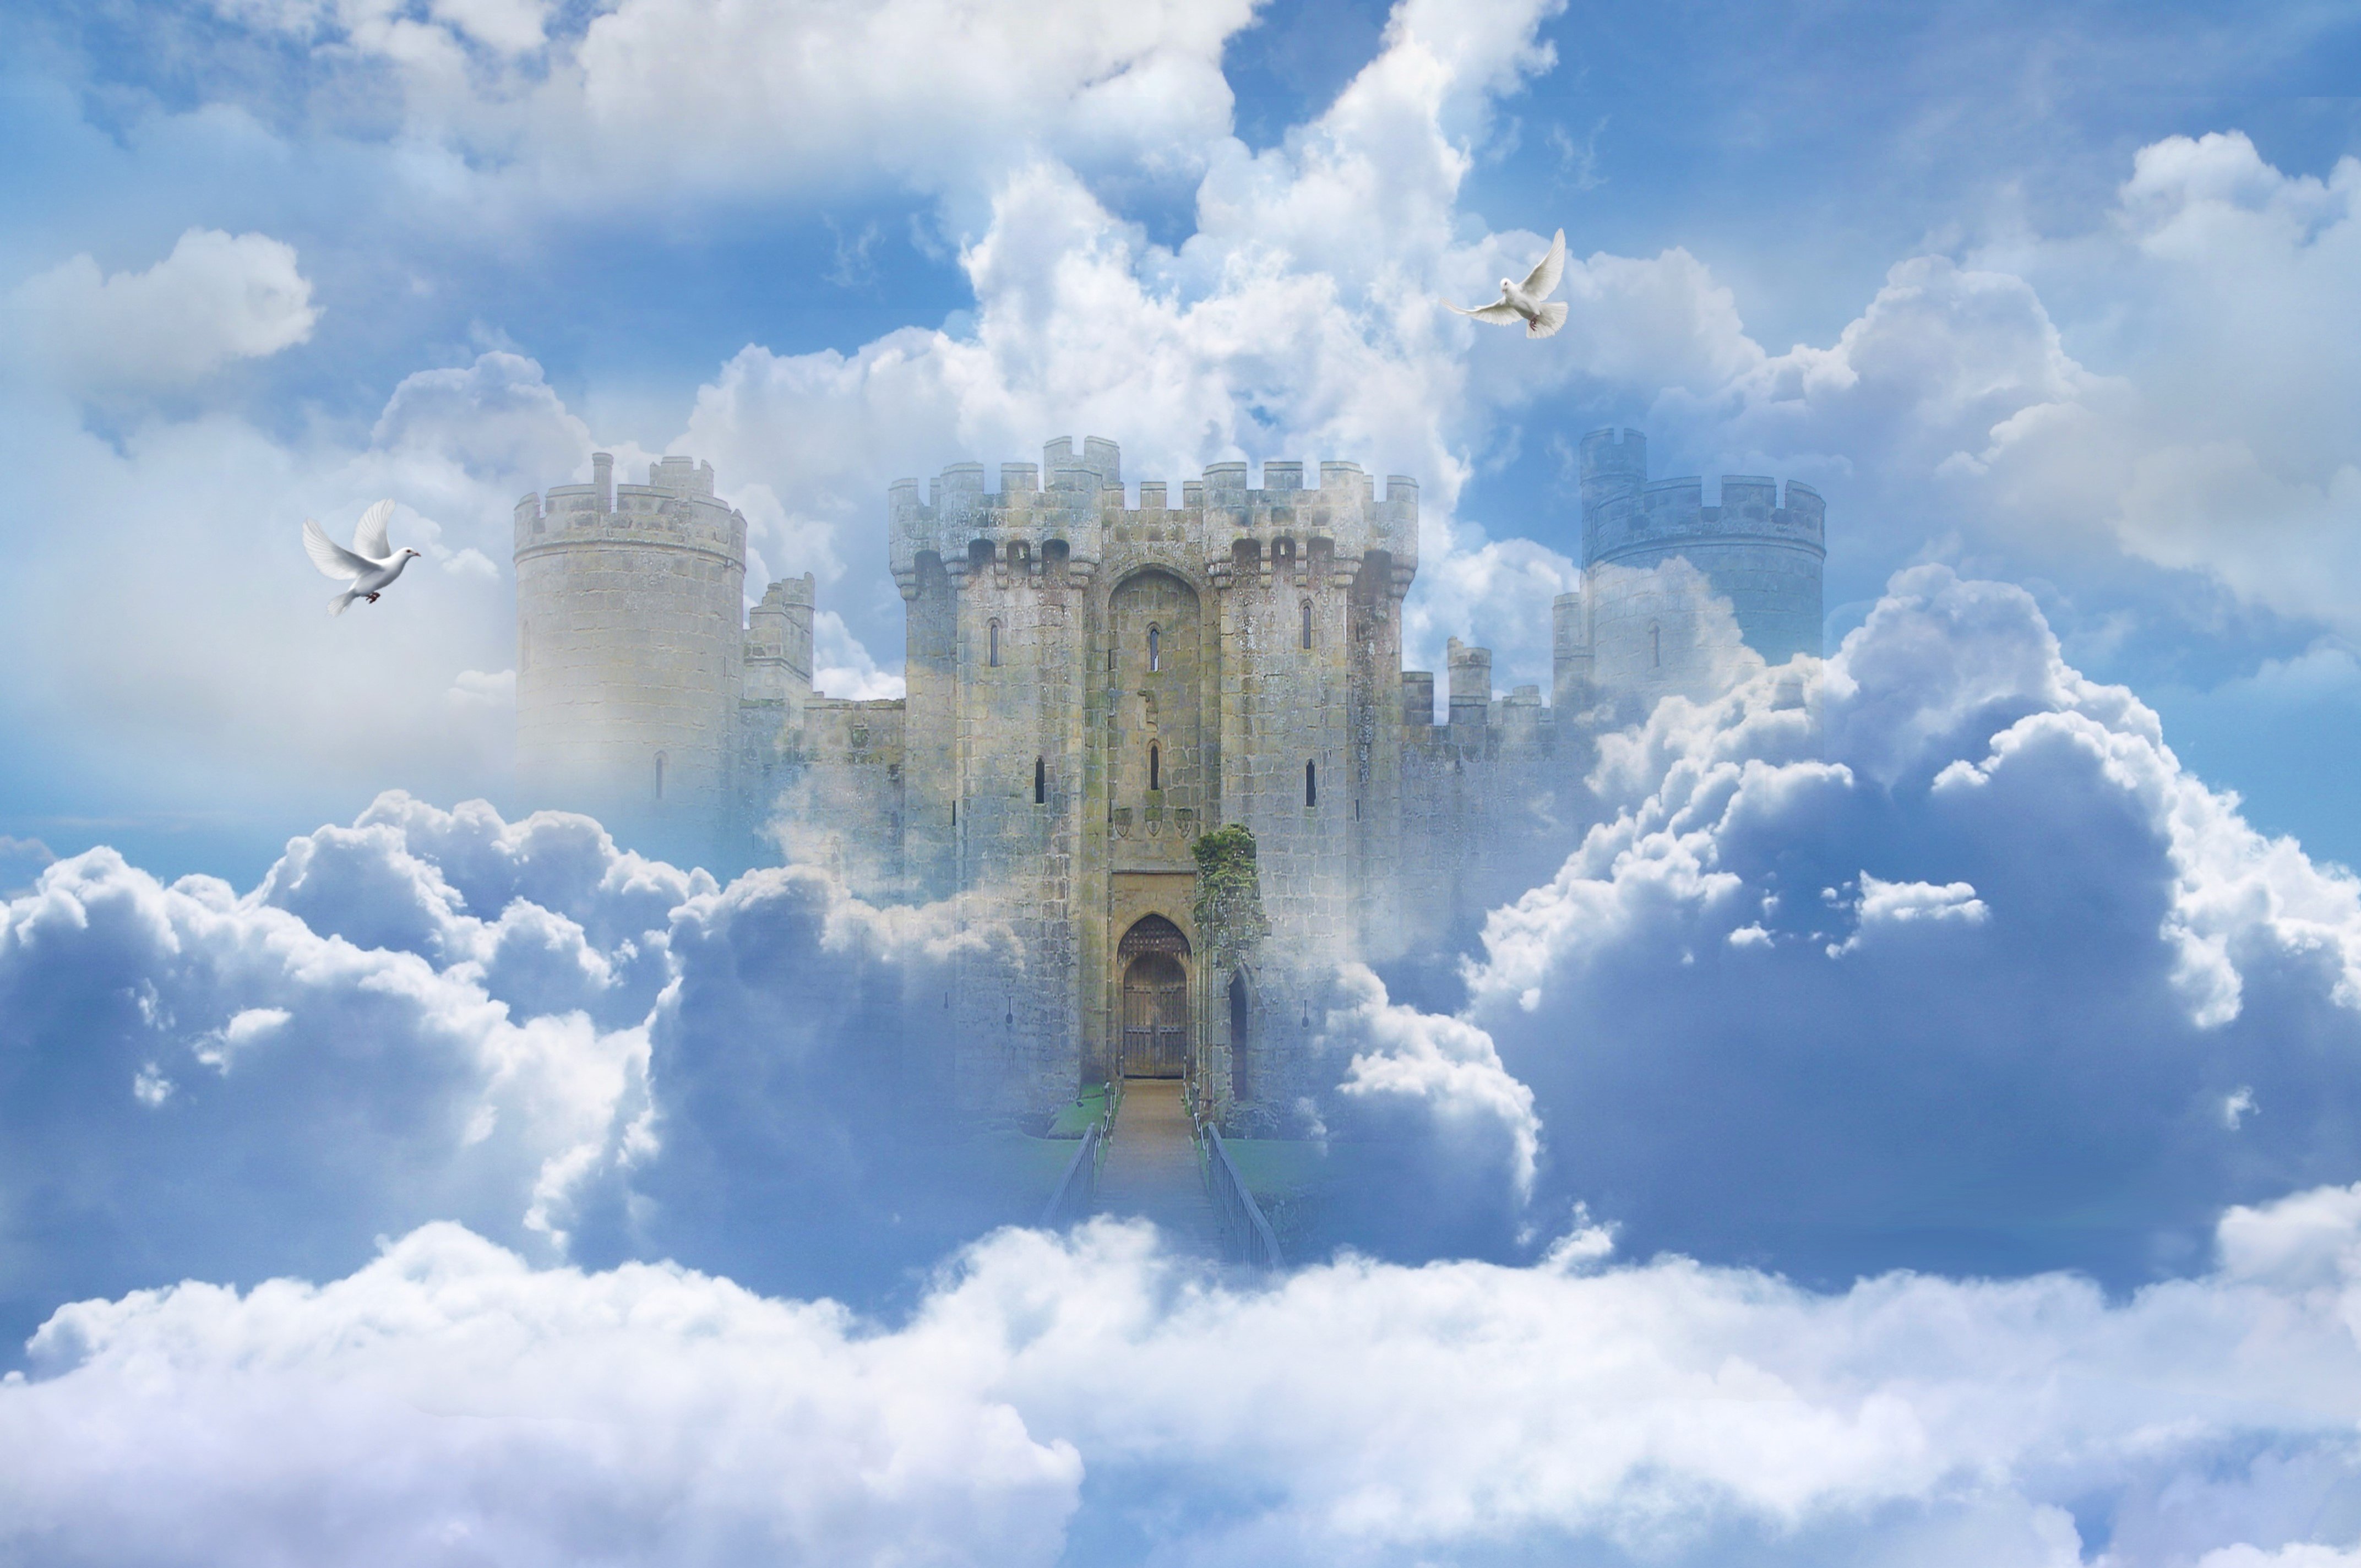 Heaven. "Дворец в облаках" Джеймс Гарни. Иерусалим храм небесной. Небесный Иерусалим Церковь Небесная. Царство Божье Небесный Иерусалим.